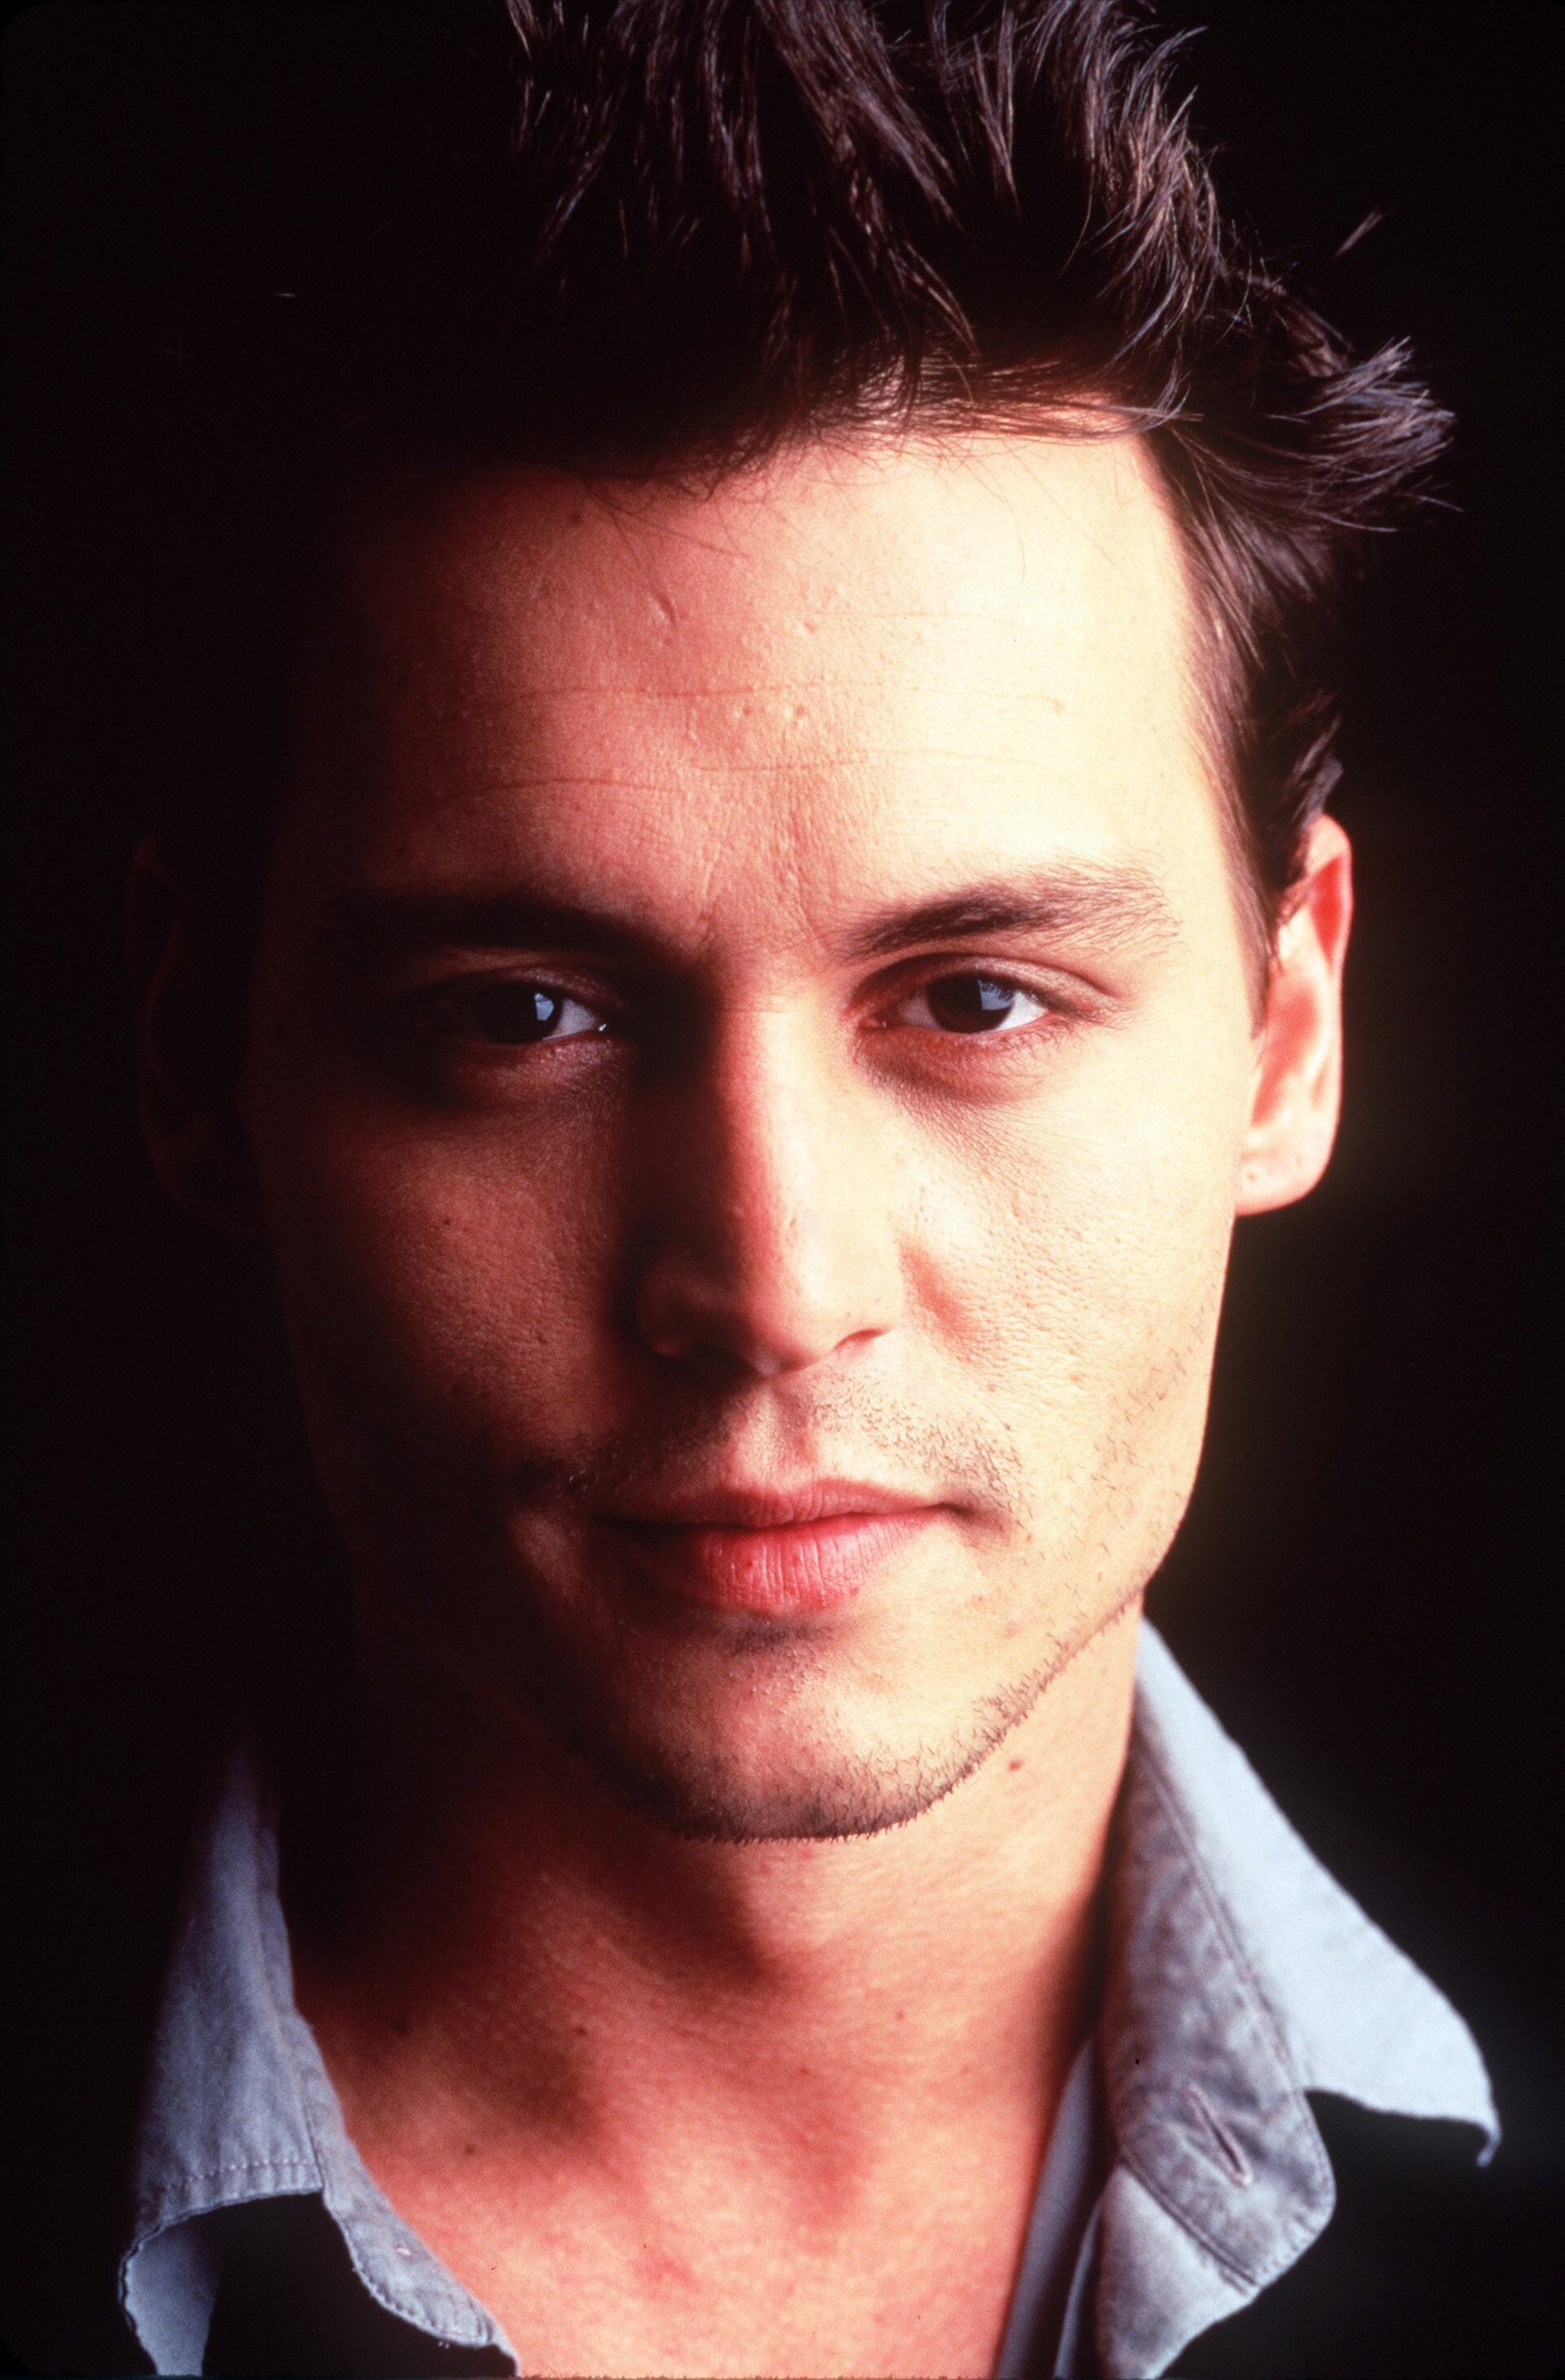 JD 1995 - Johnny Depp Photo (24420959) - Fanpop